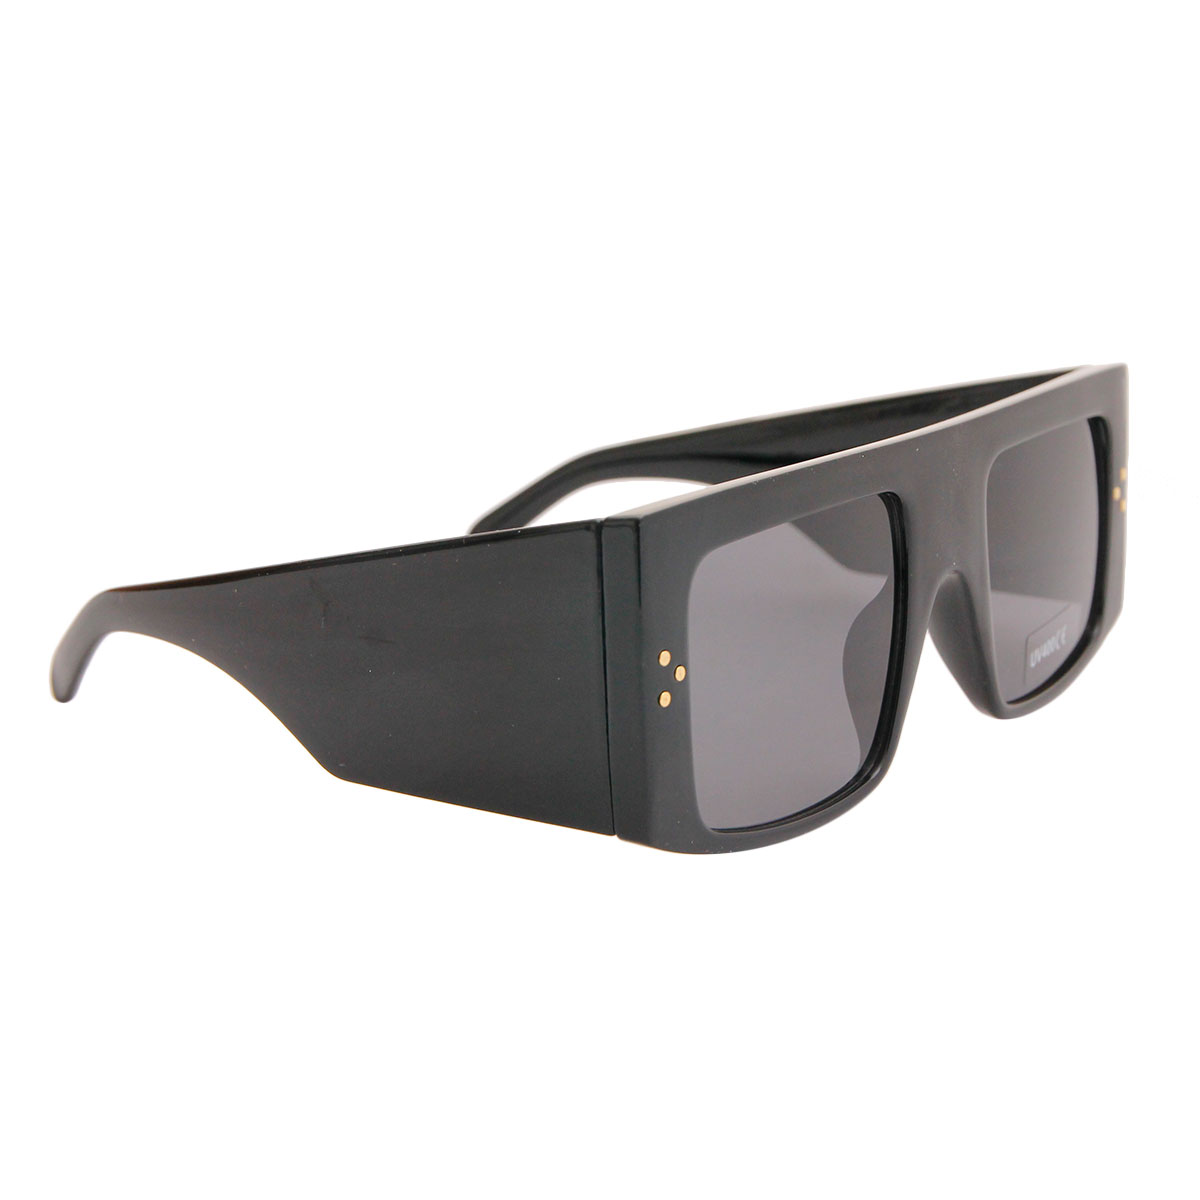 Black Extra Wide Celine Inspired Sunglasses